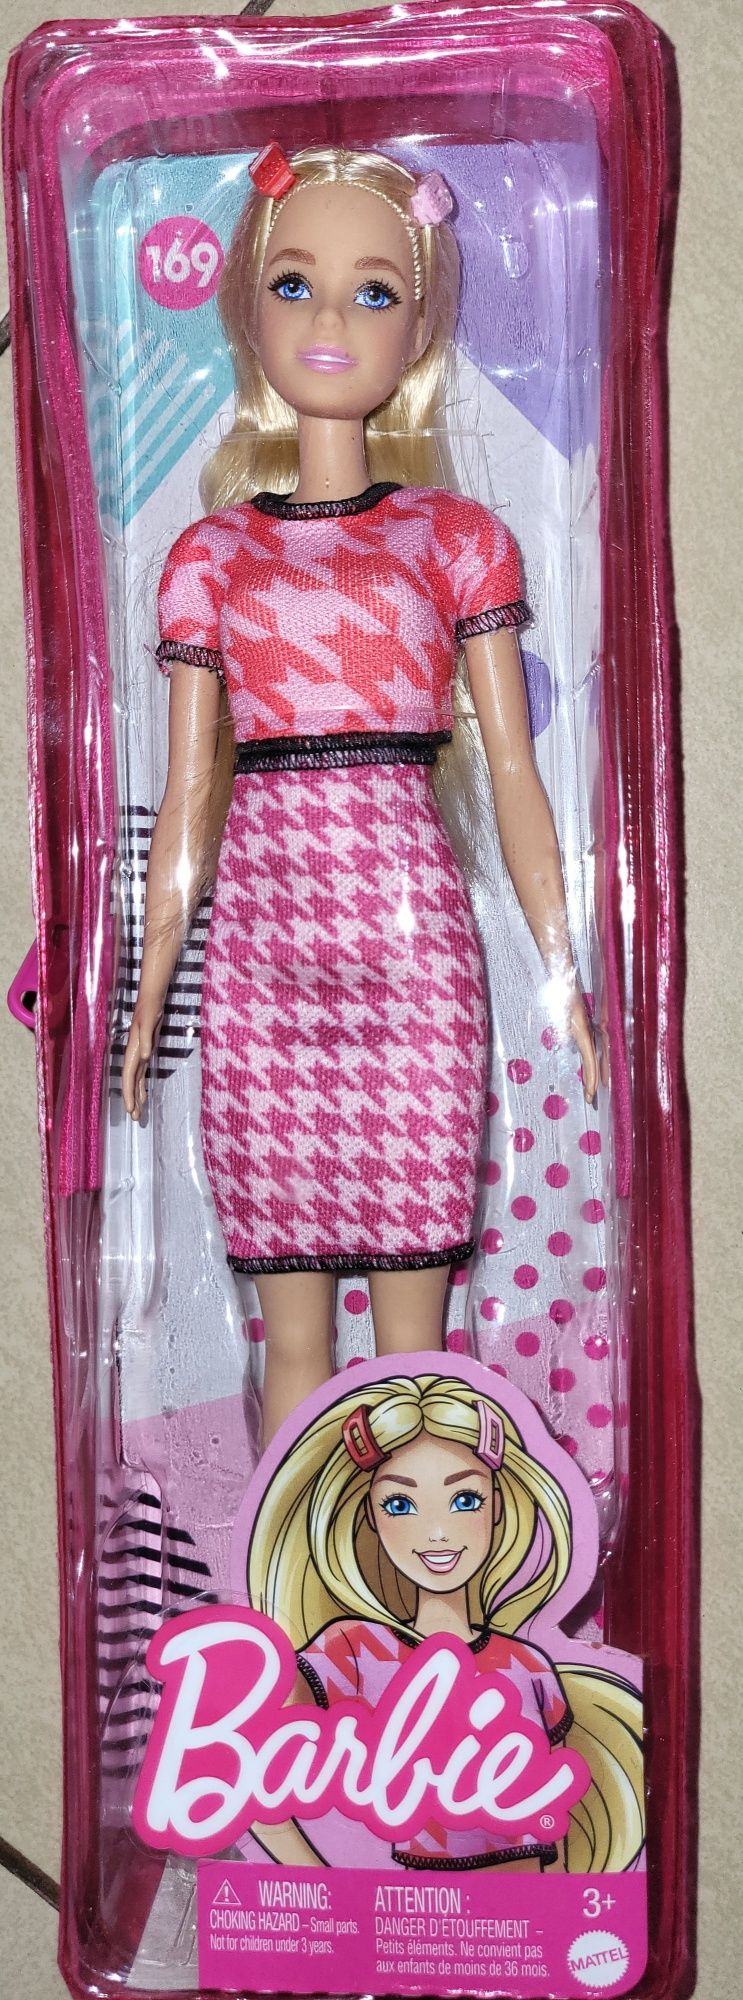 Lalka Barbie Fashionistas numer 169